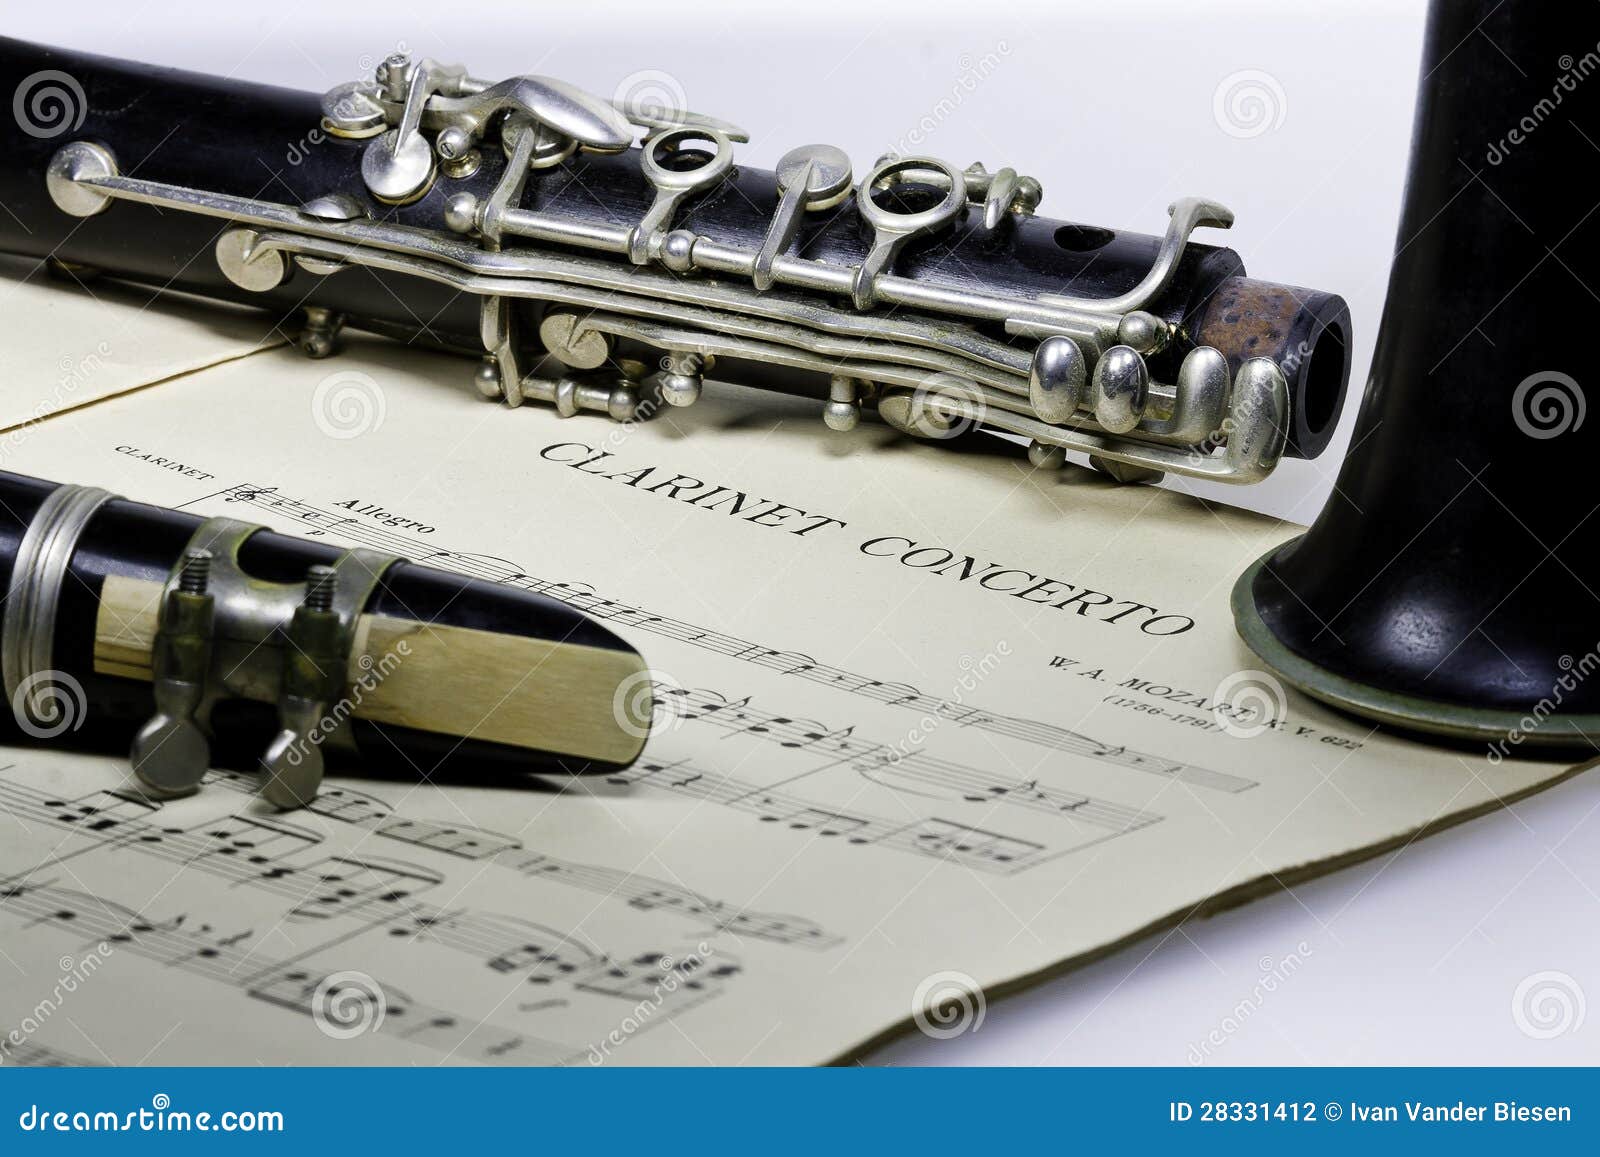 clarinet concerto mozart bes clarinet